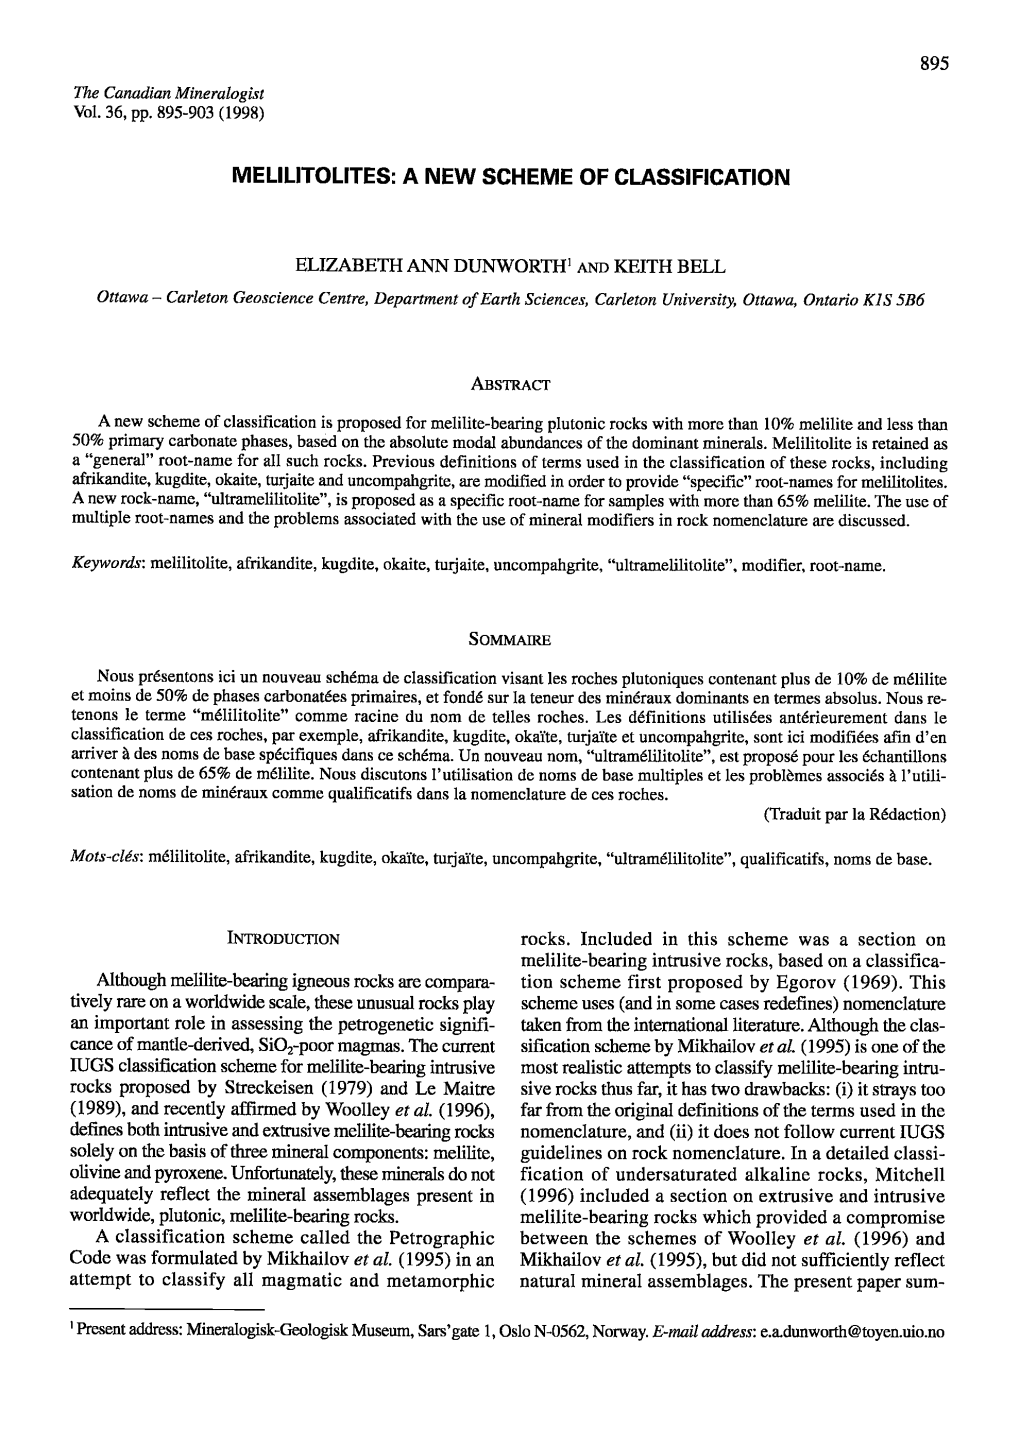 Melilitolites: a New Scheme of Classification 897